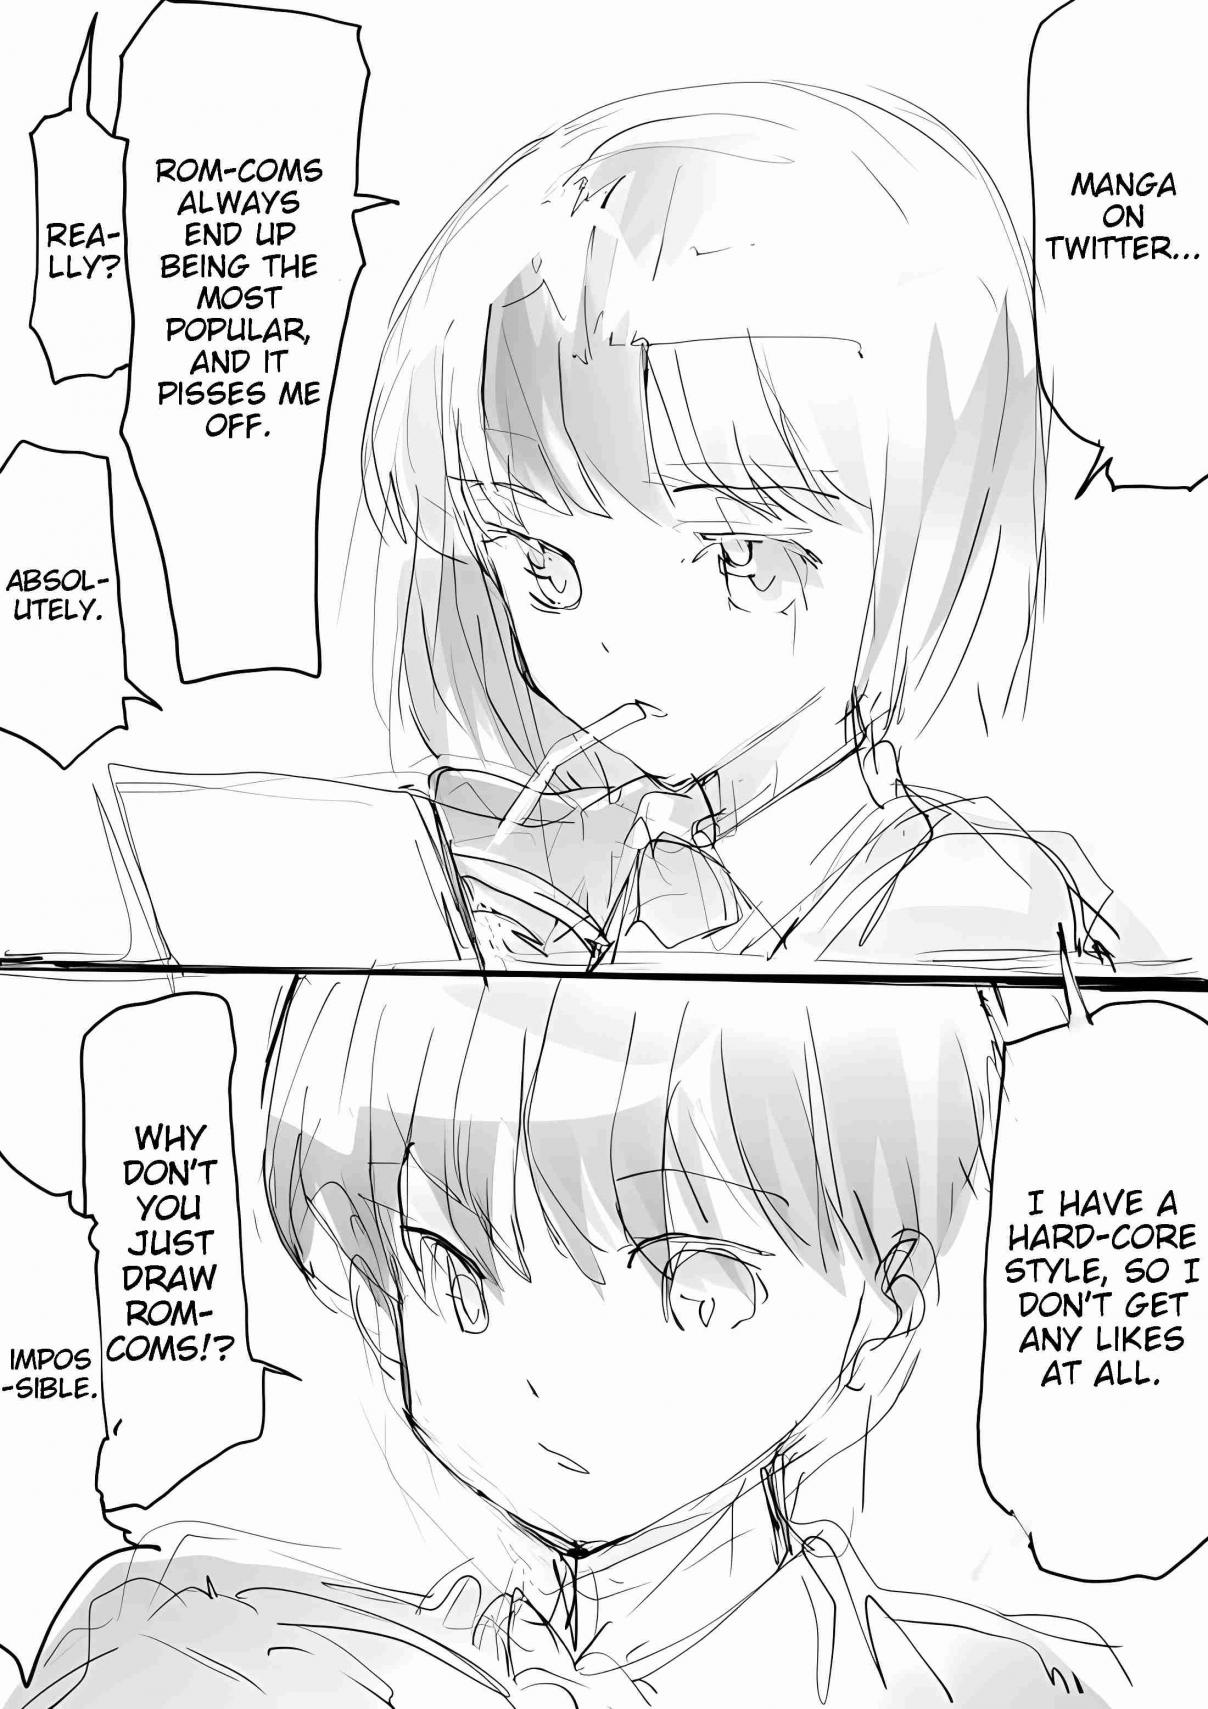 A girl who draws Twitter manga and her boyfriend